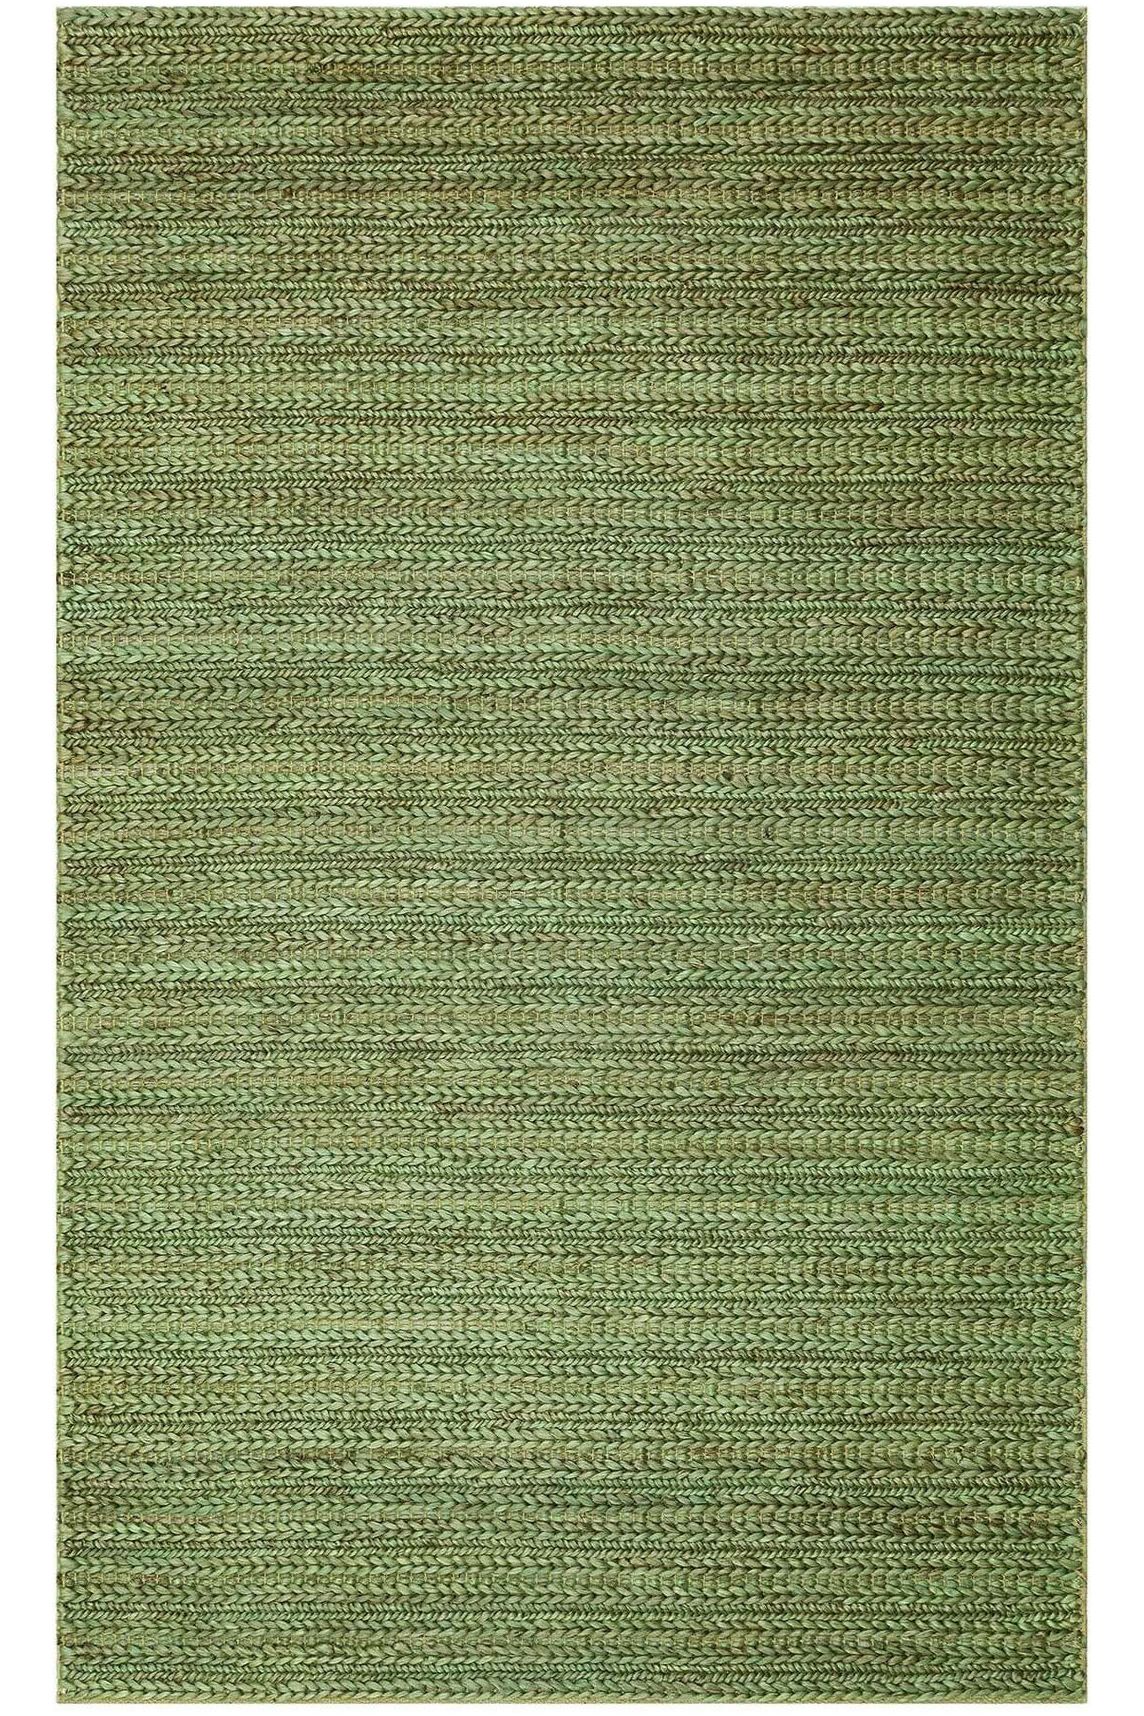 #Turkish_Carpets_Rugs# #Modern_Carpets# #Abrash_Carpets#Triple Green Xw